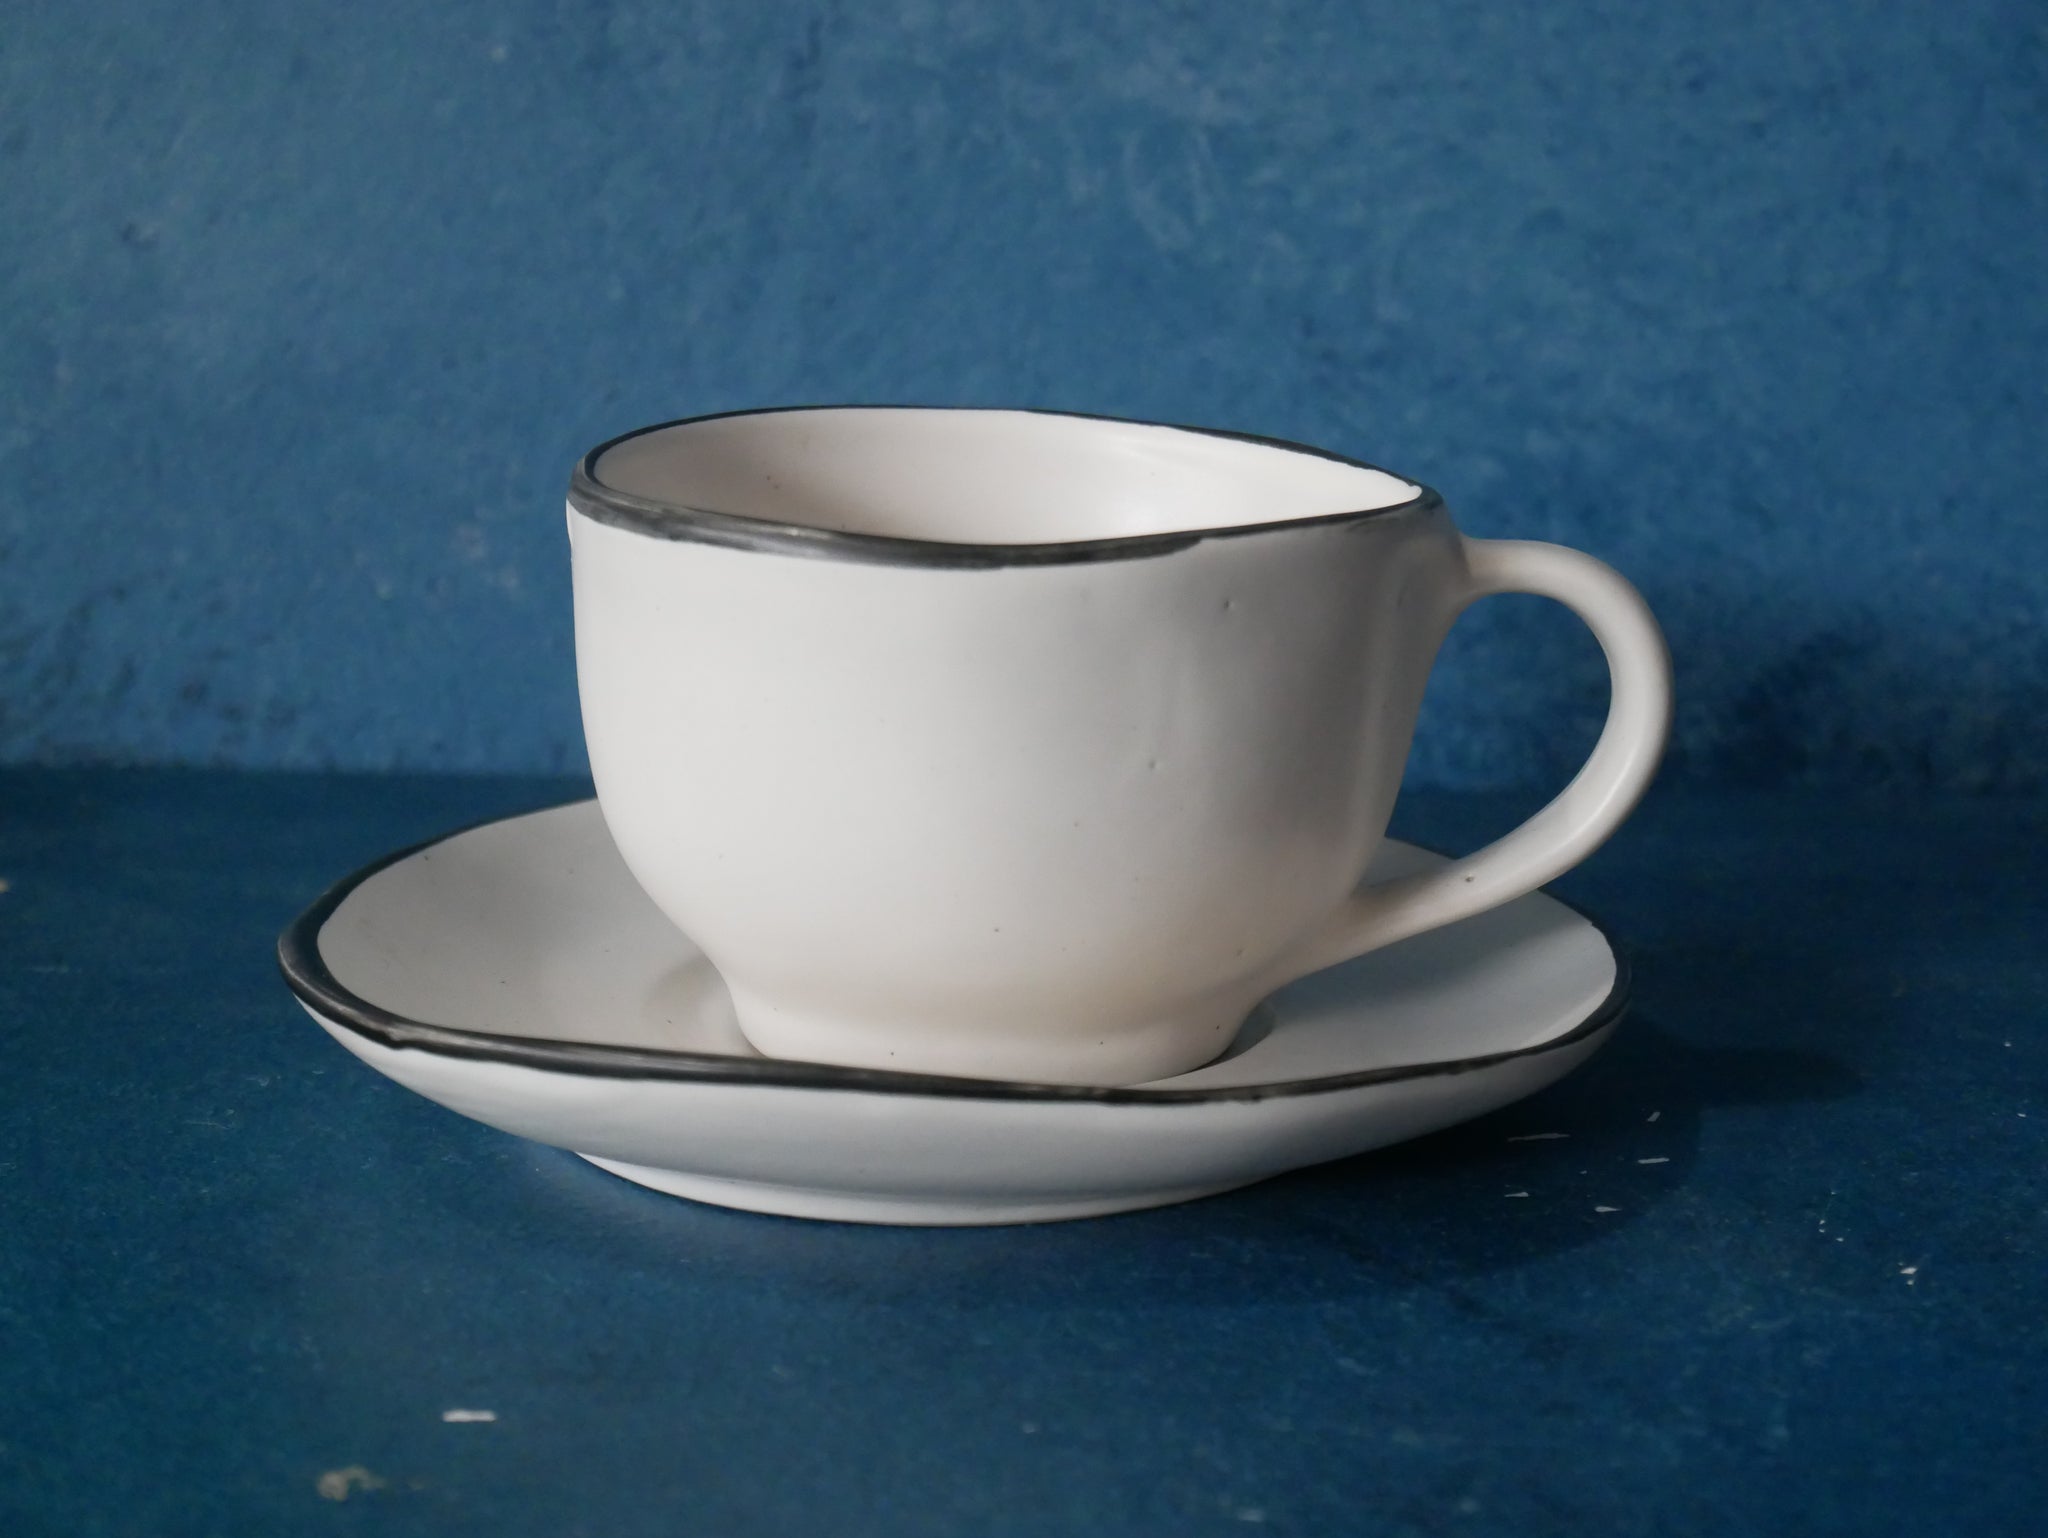 Free form / uneven Coffee set - White - black rim